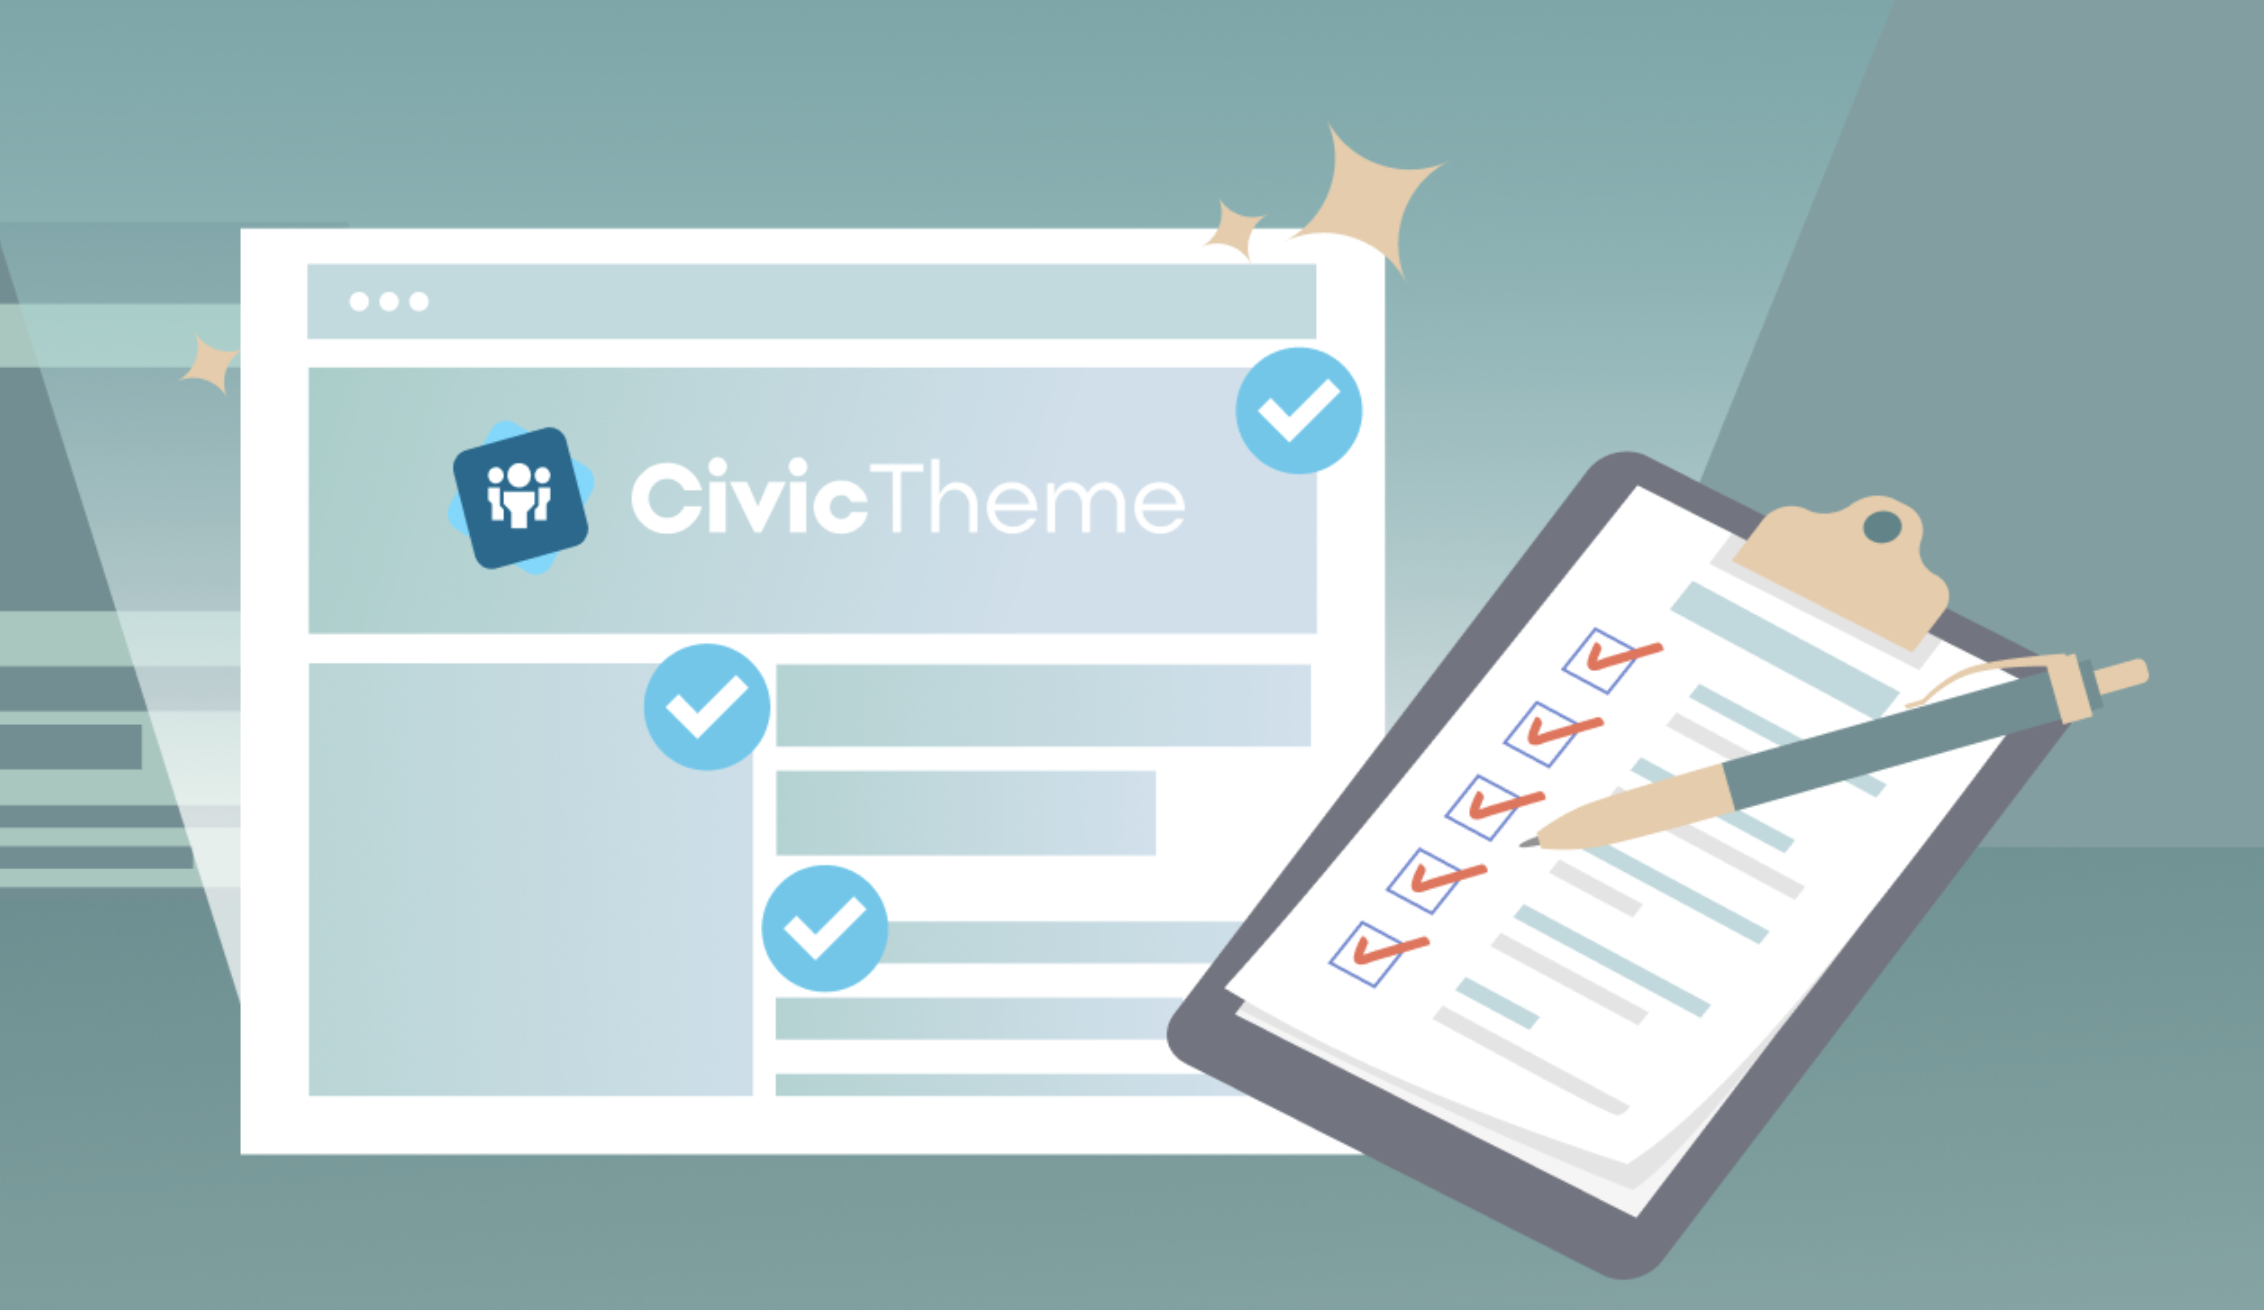 CivicTheme checklist on clipboard